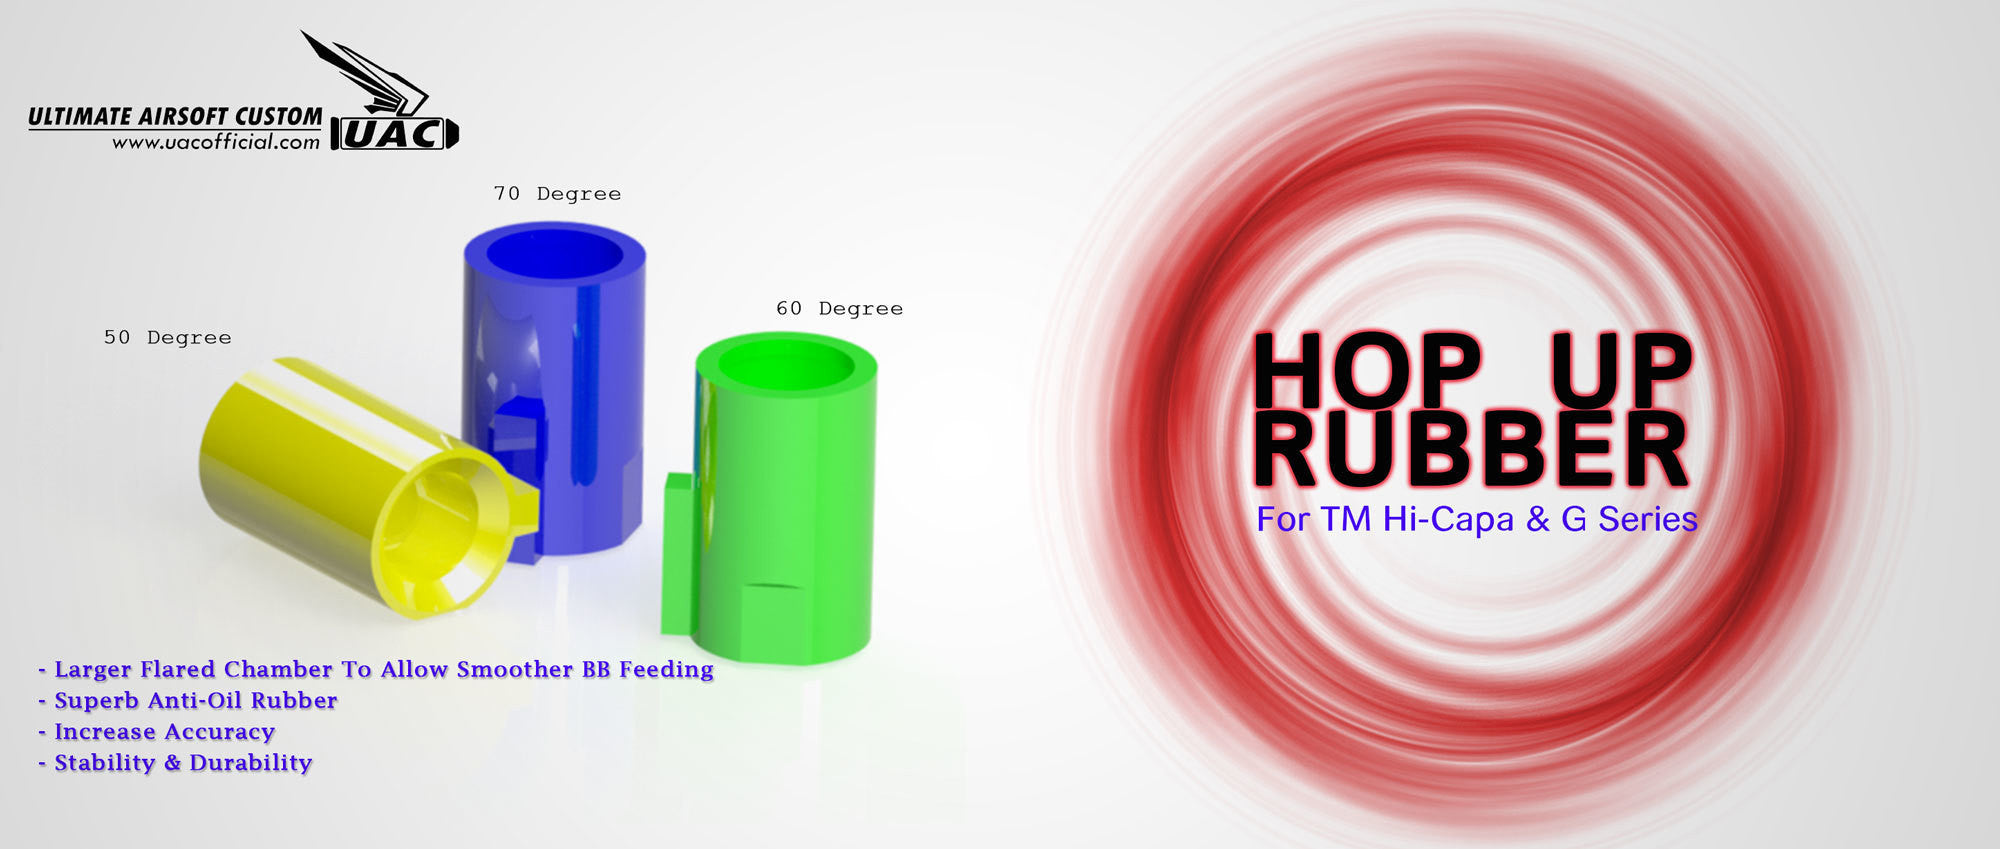 DP Hop Up Rubber For TM Hi-capa, G series, M&P9 & M4A1 MWS (70°)